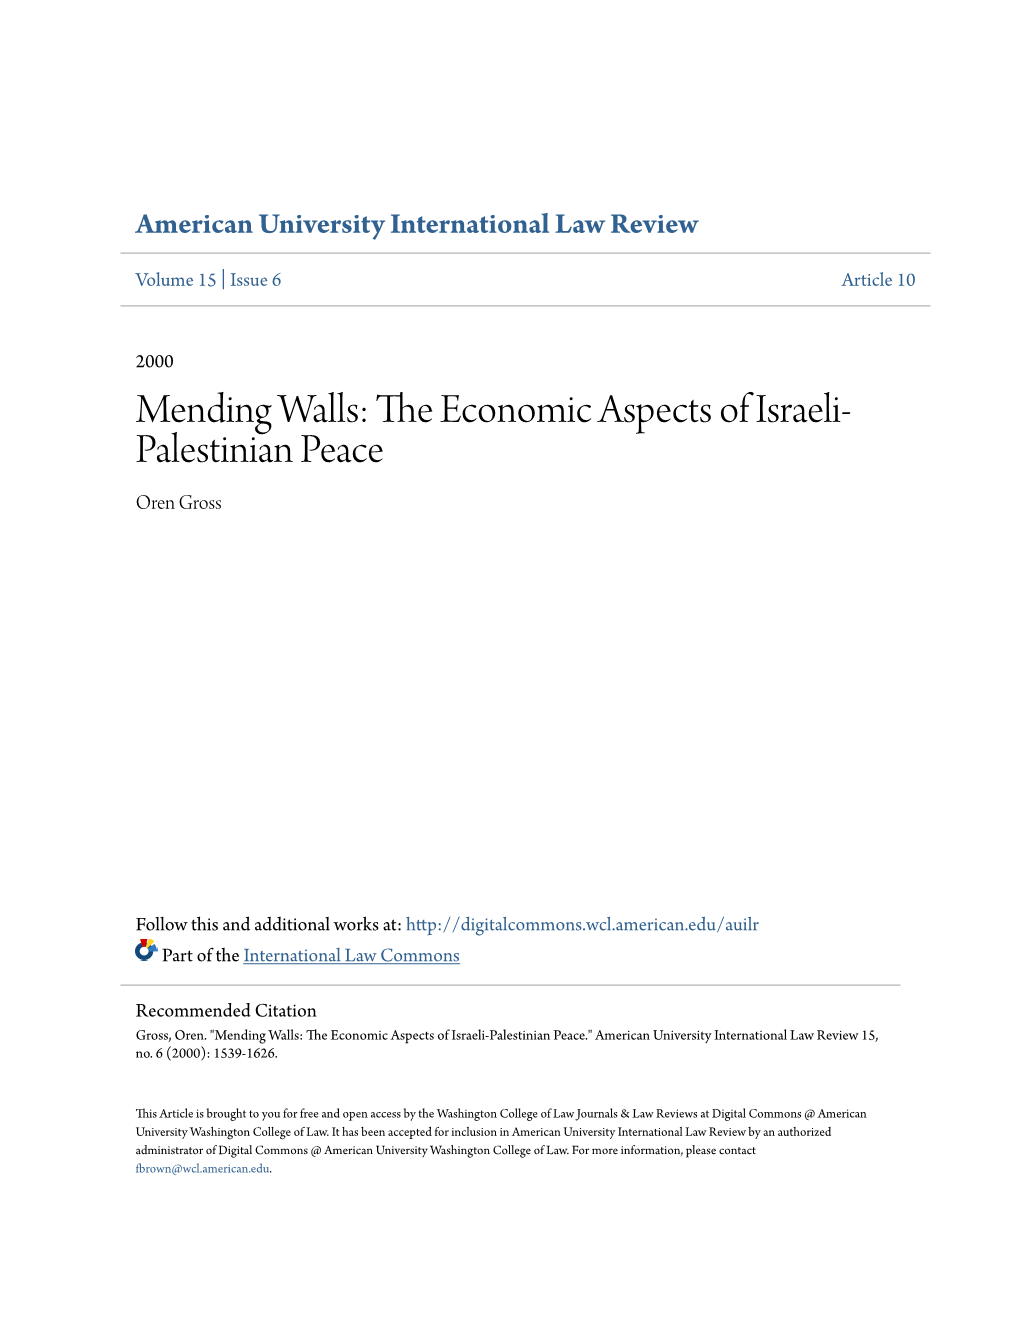 The Economic Aspects of Israeli-Palestinian Peace